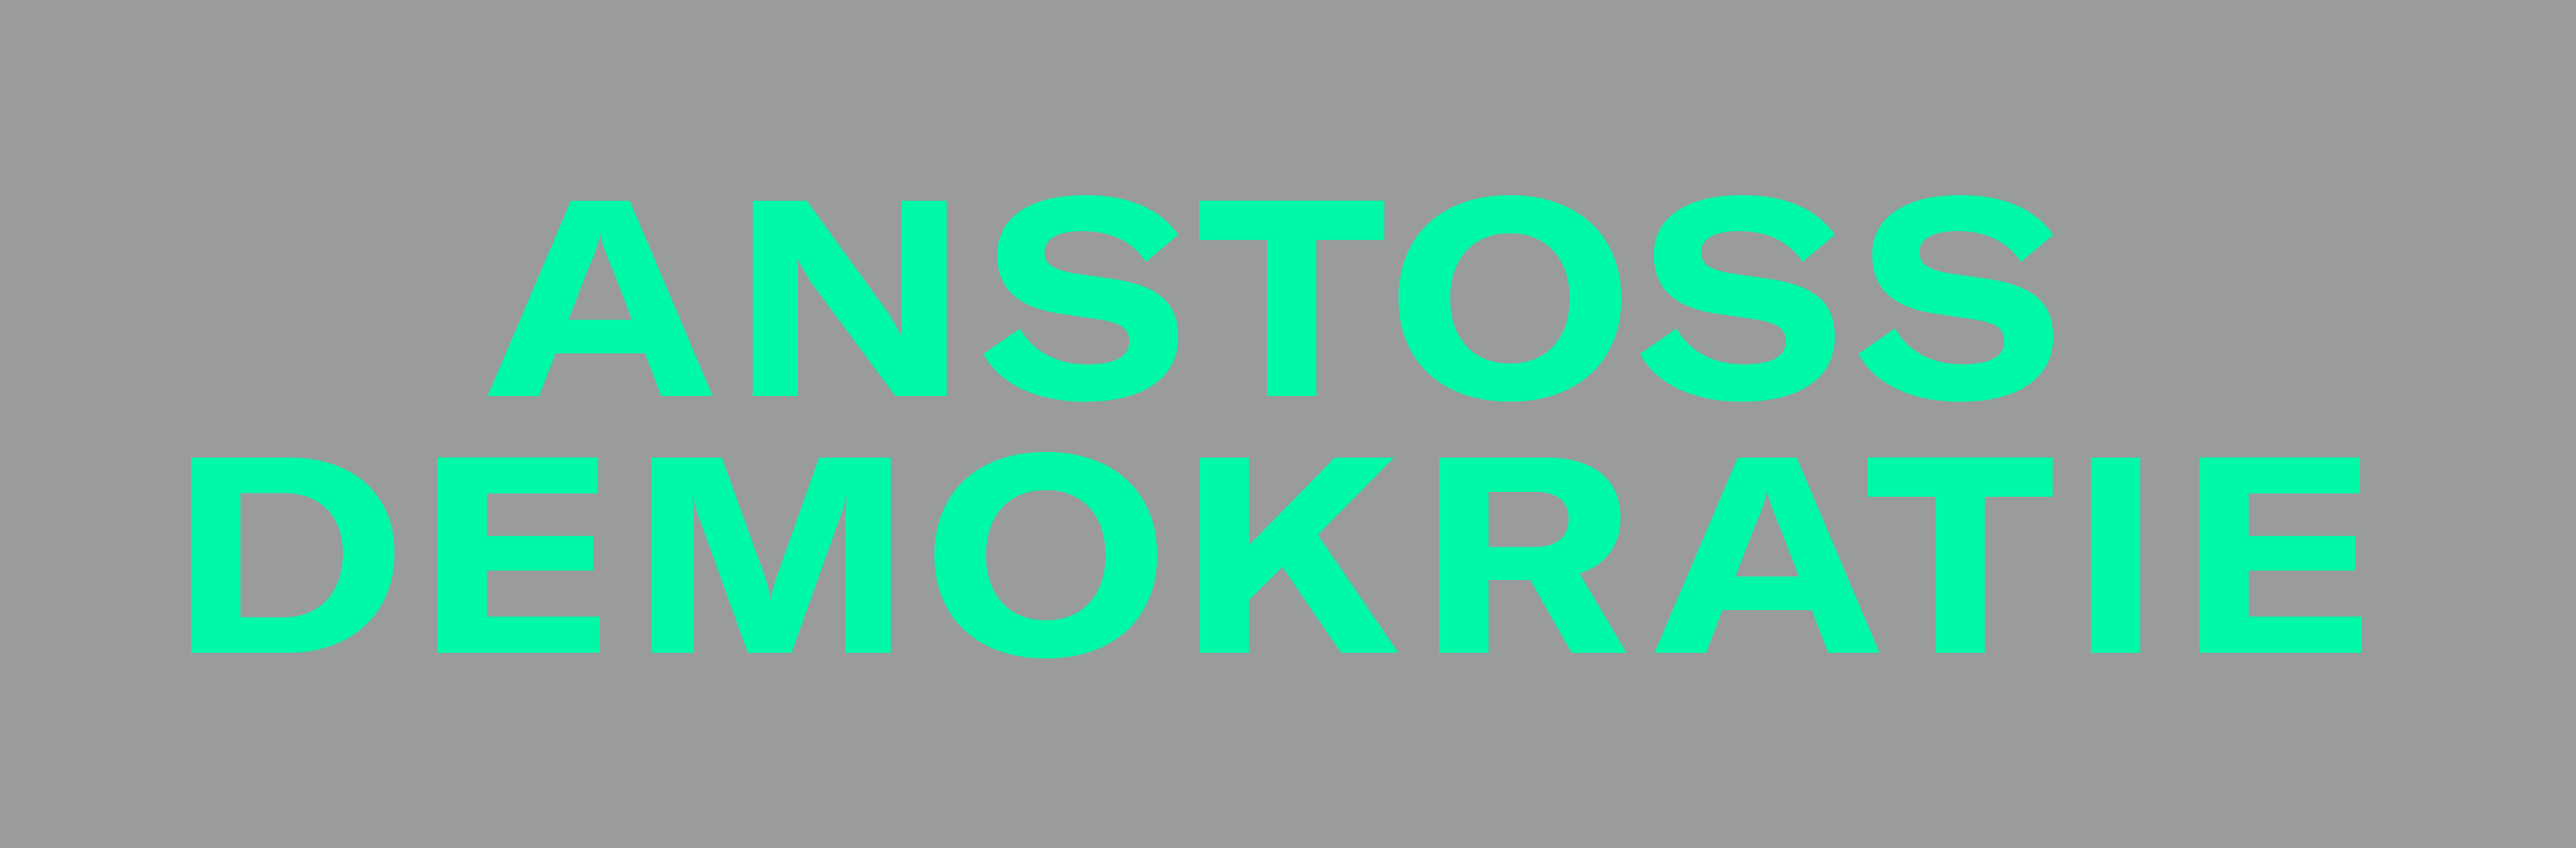 ANSTOSSDEMOKRATIE Logo